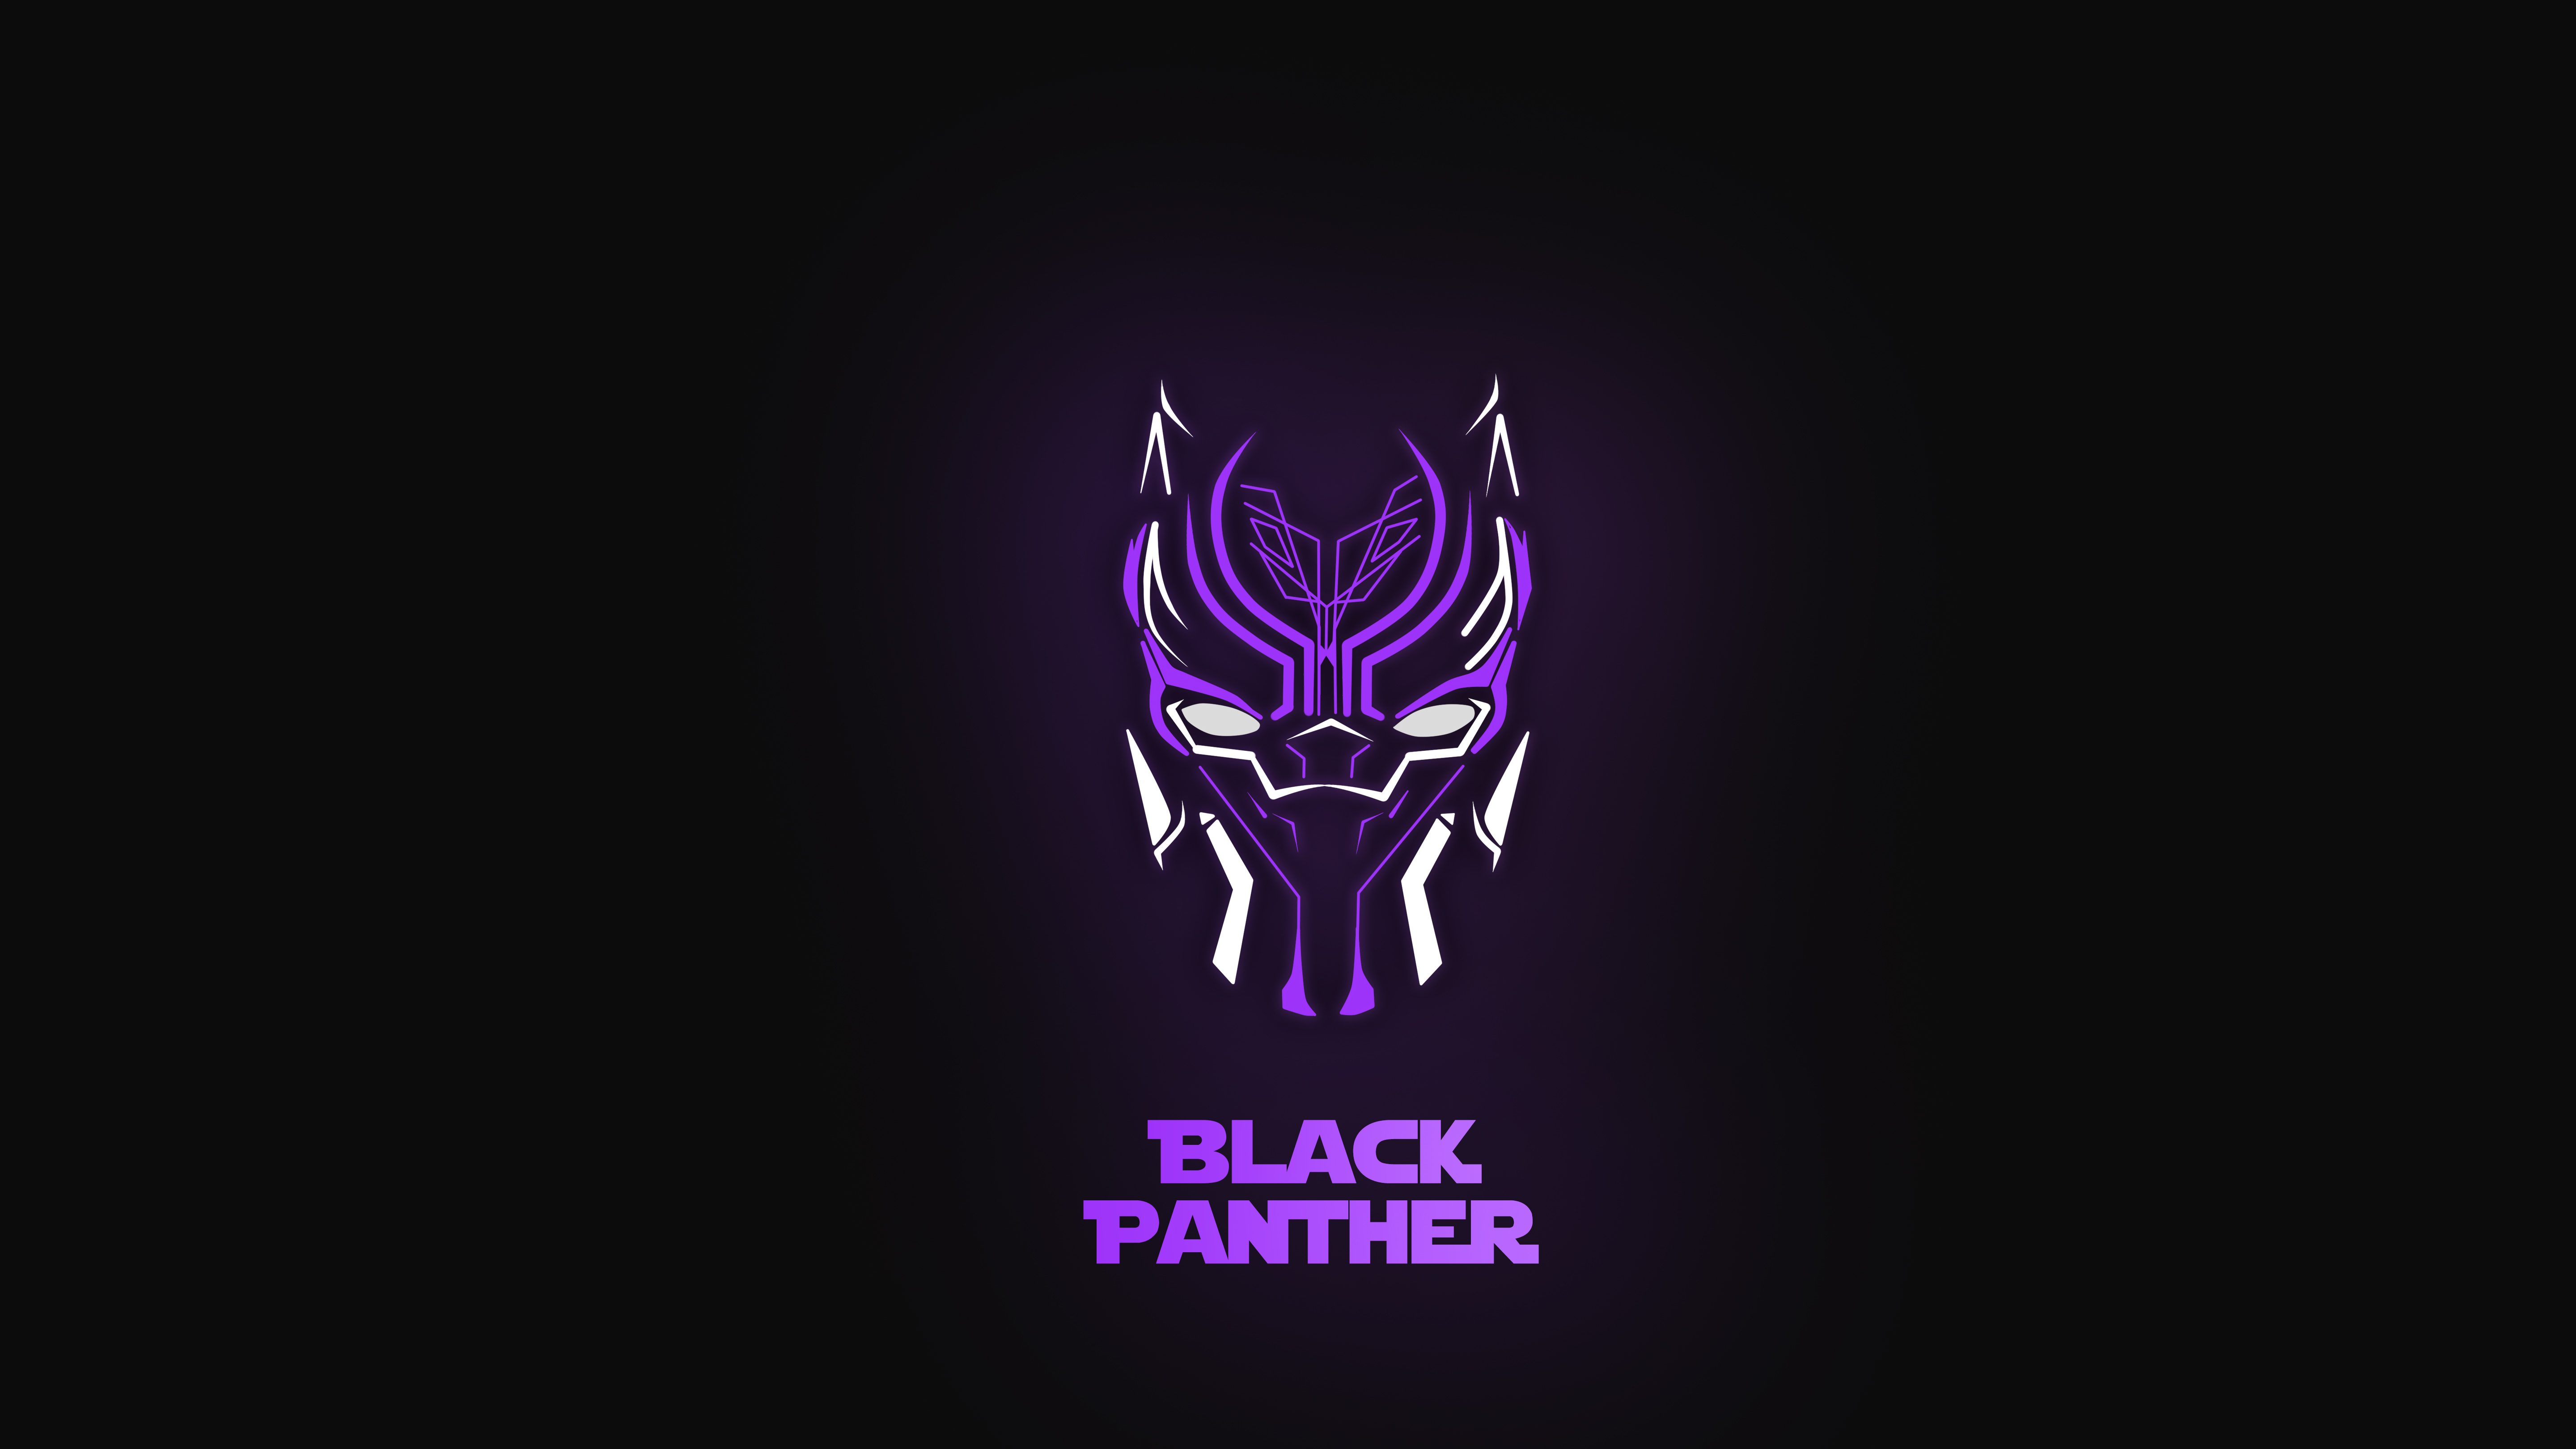 Black Panther Neon 5k, HD Superheroes, 4k Wallpapers, Images